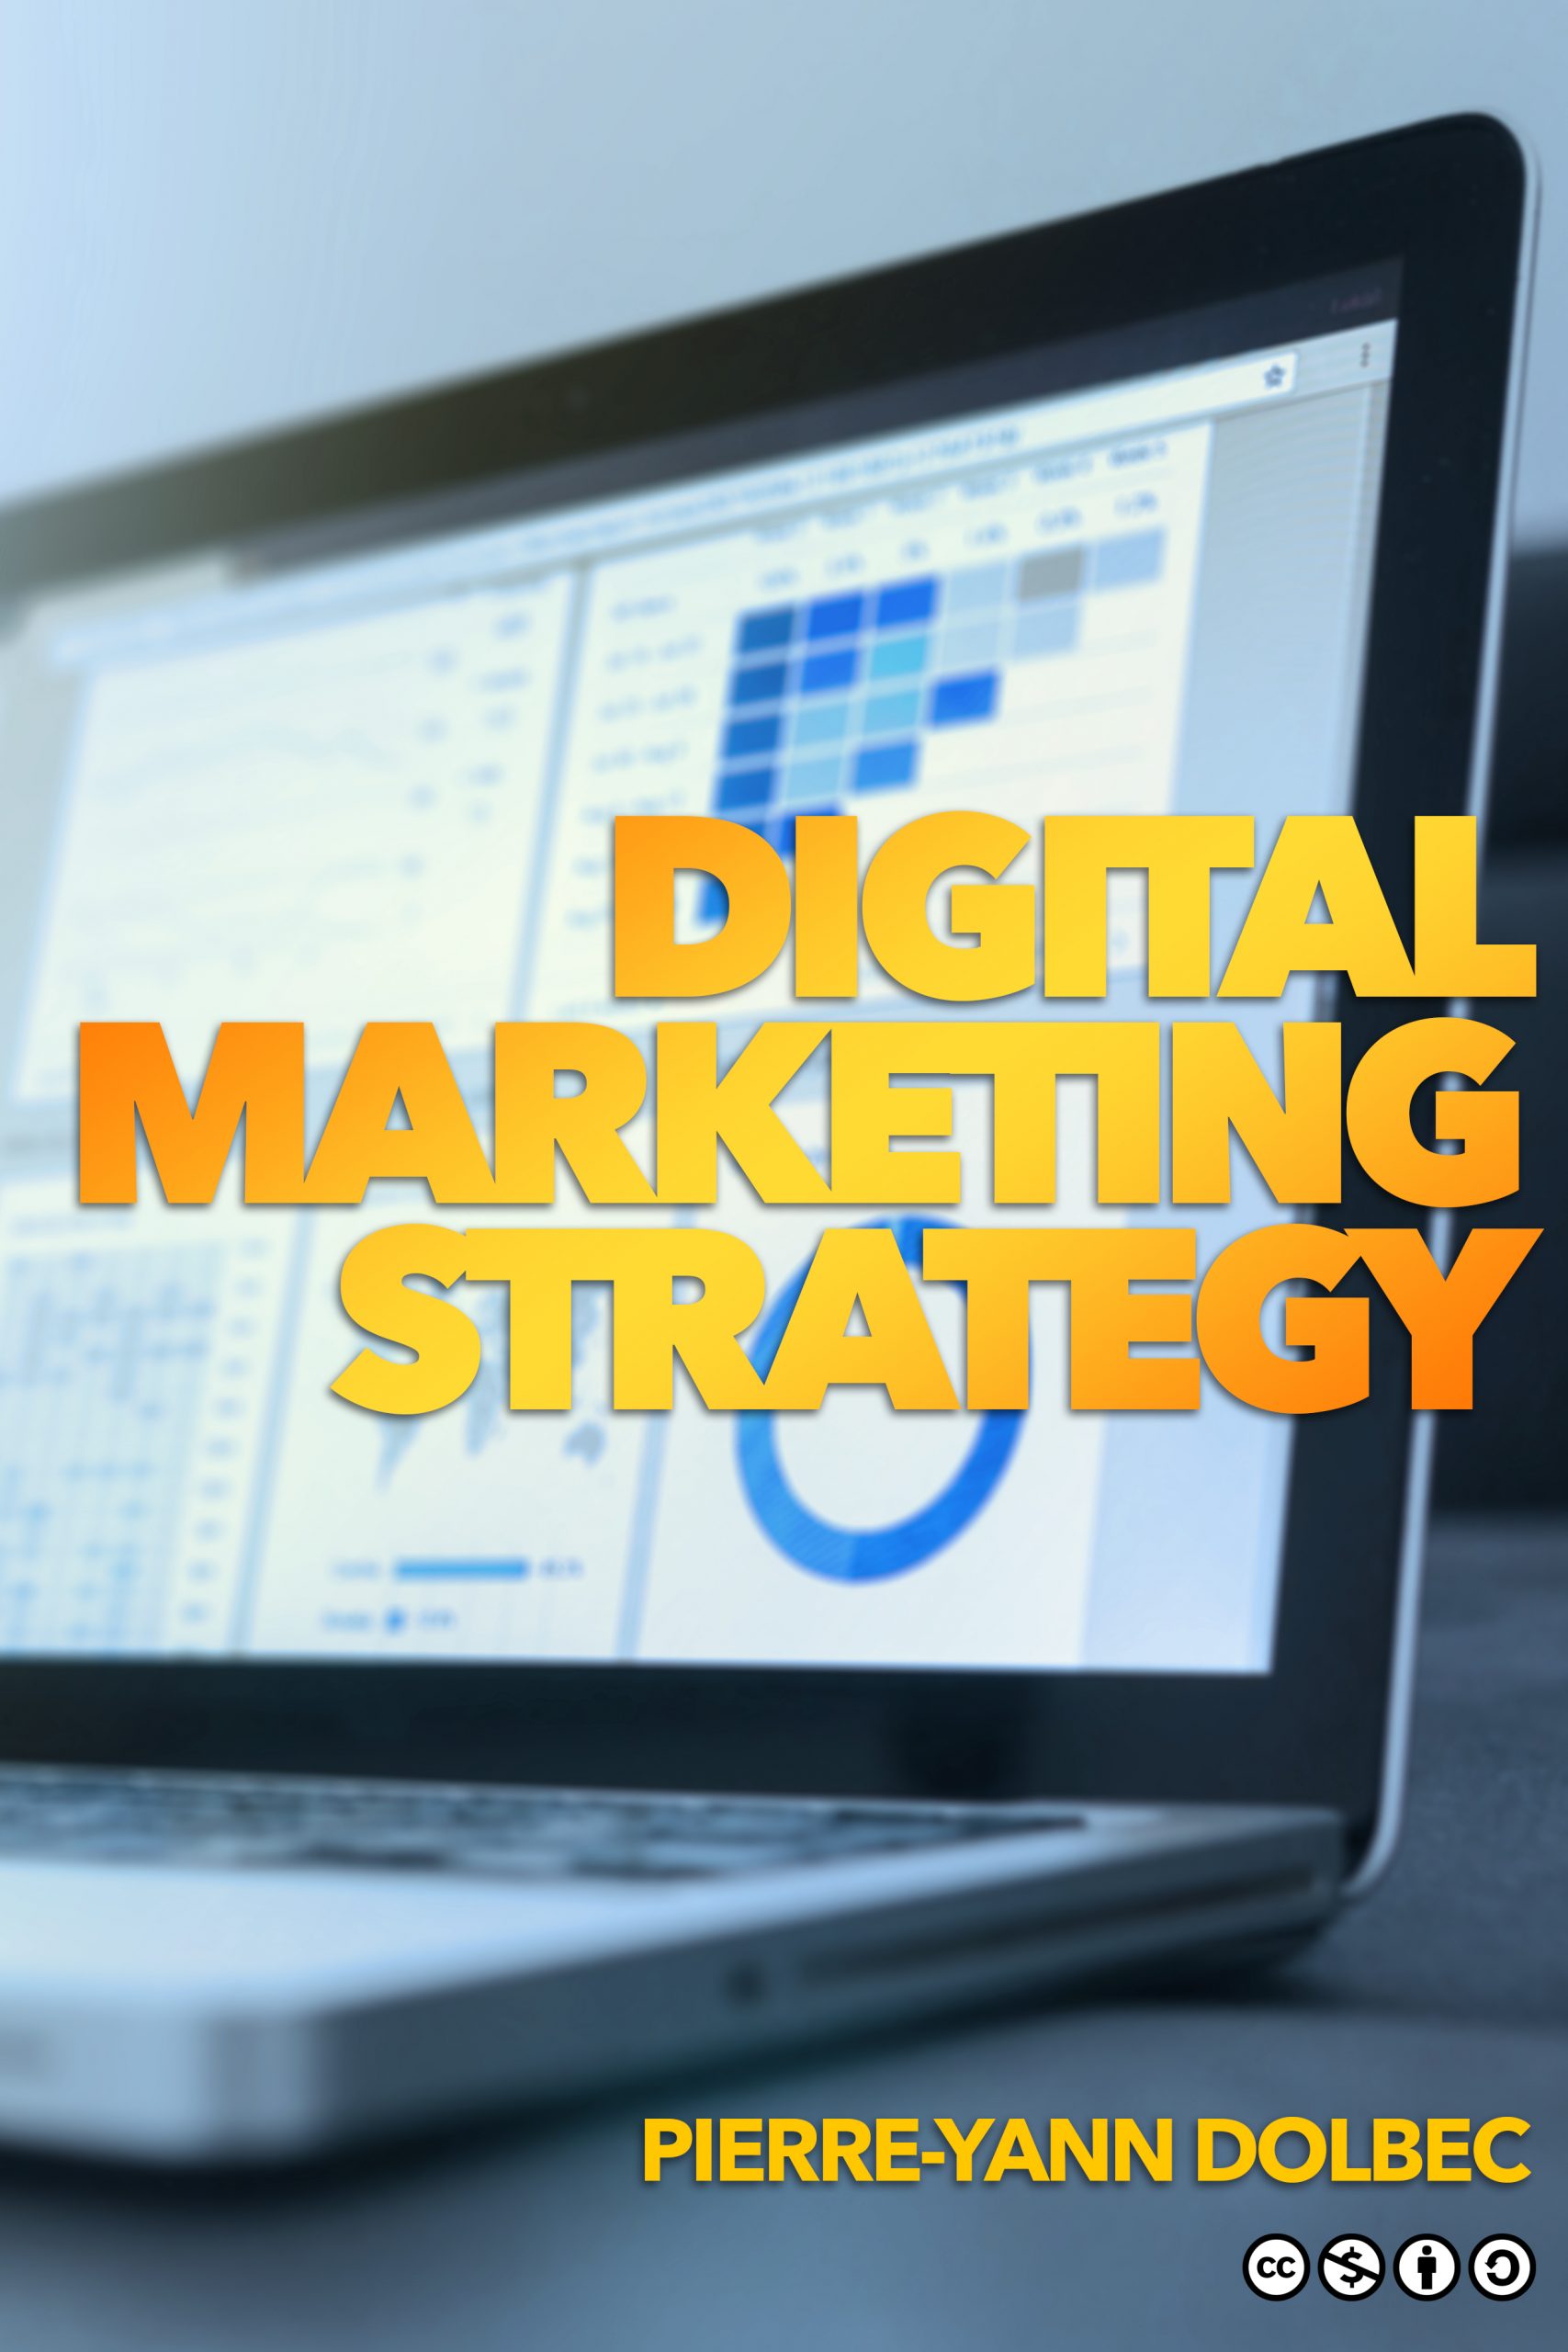 Allen Solly's Digital Marketing Strategies : A Brief Study